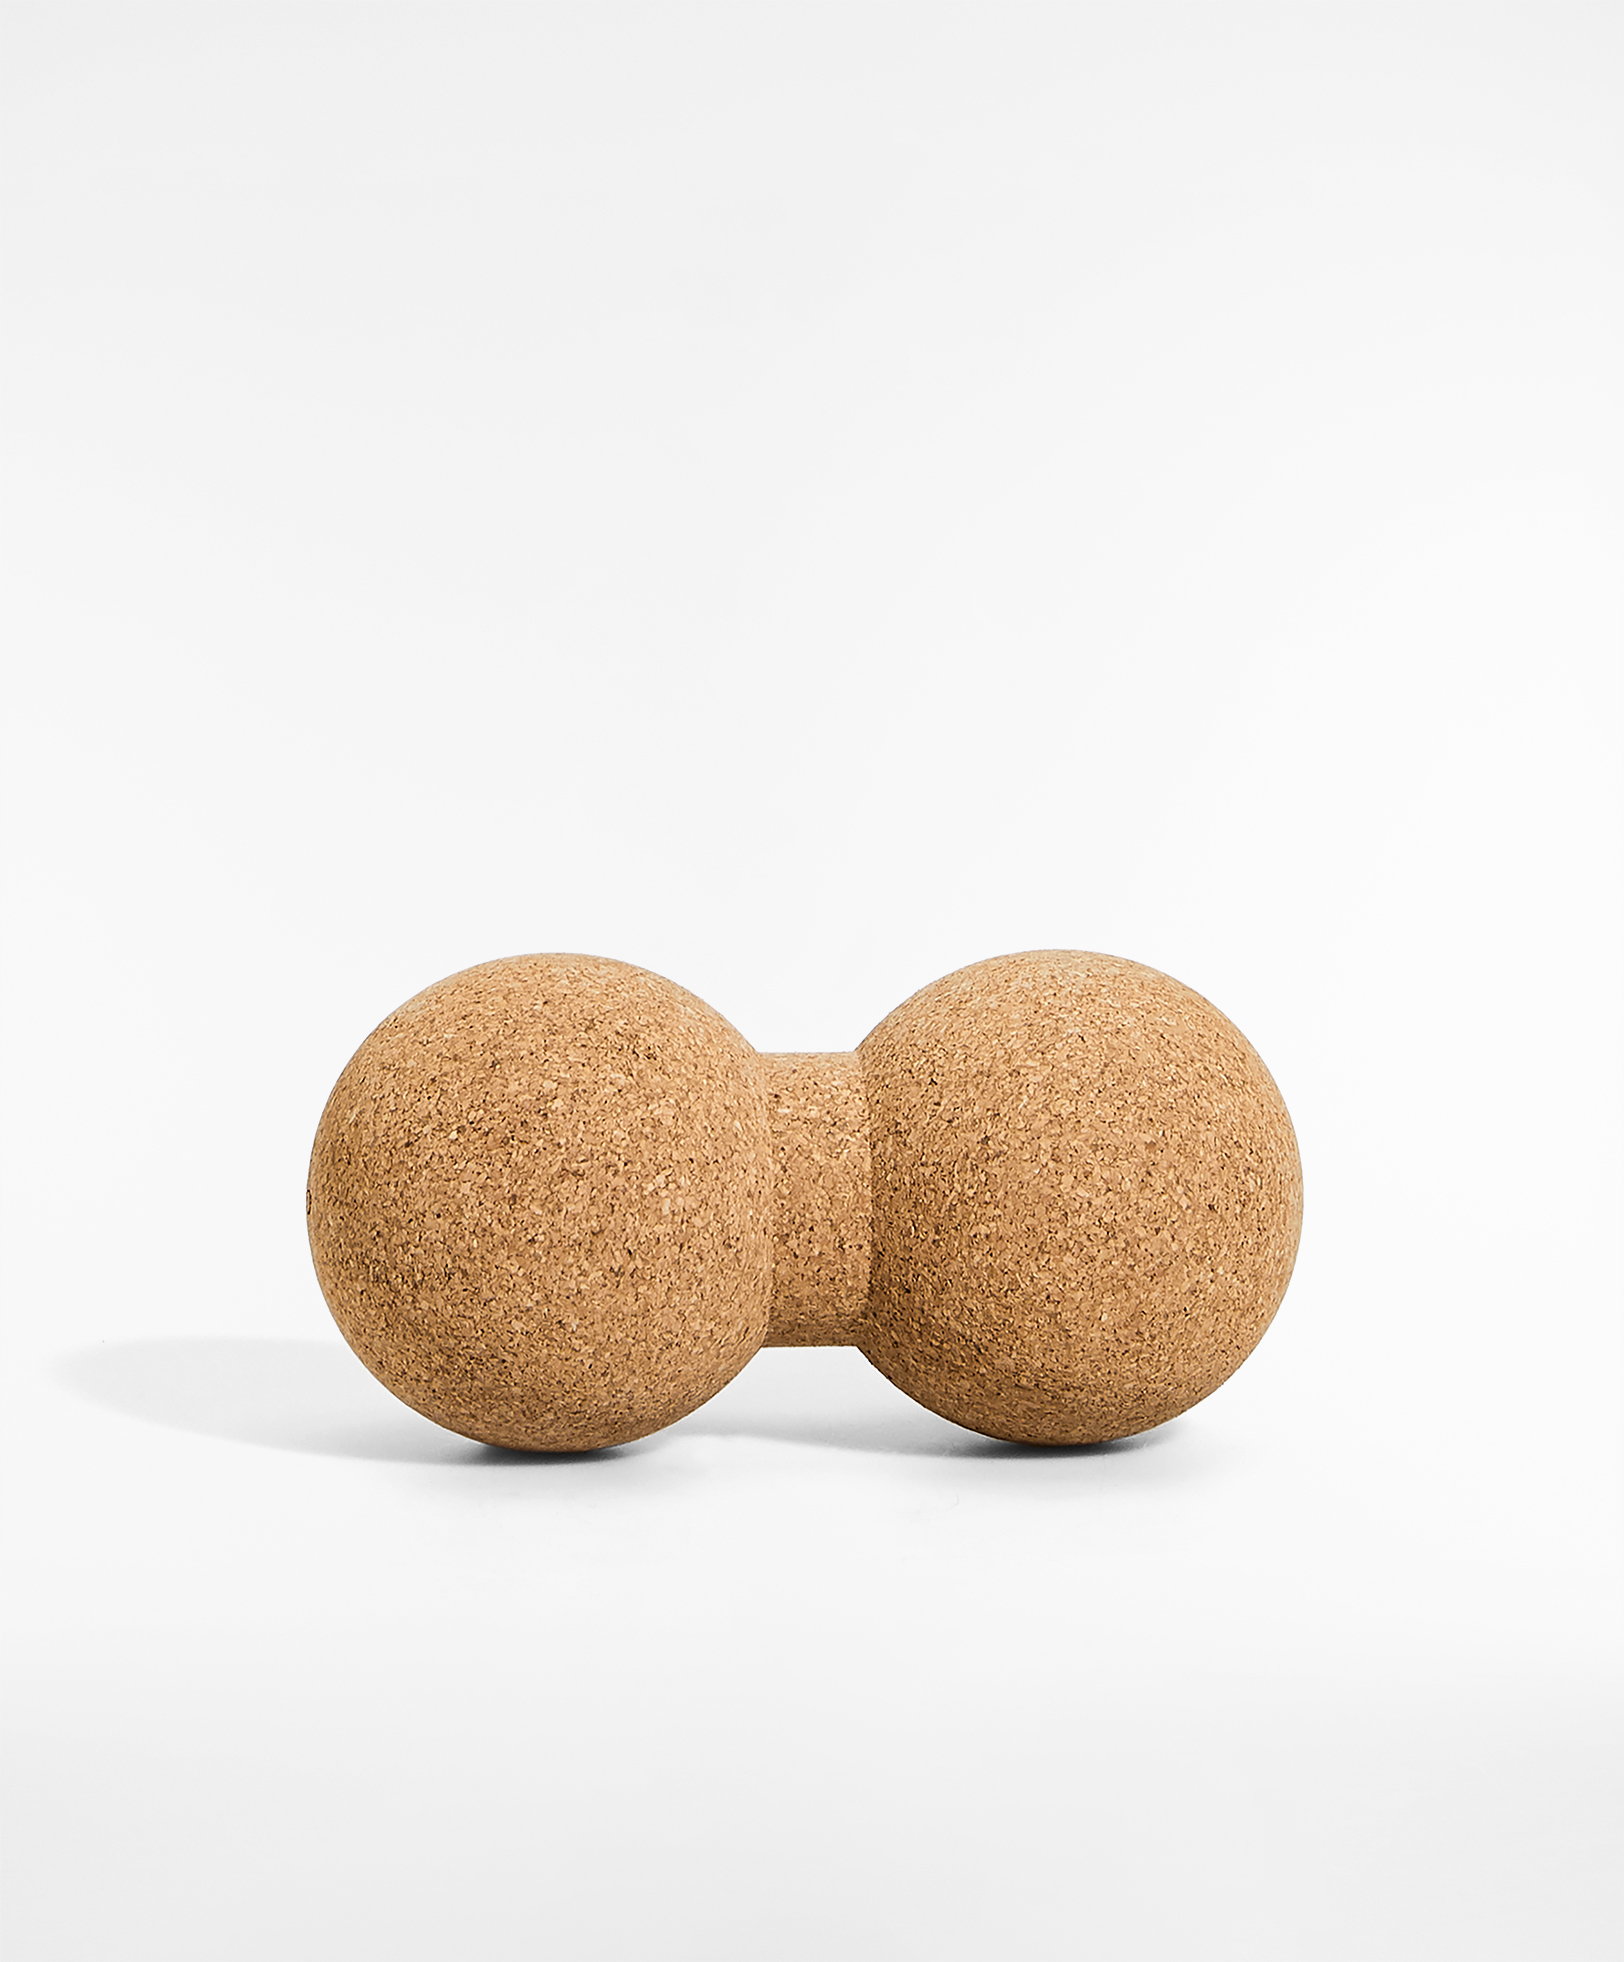 Cork massage ball